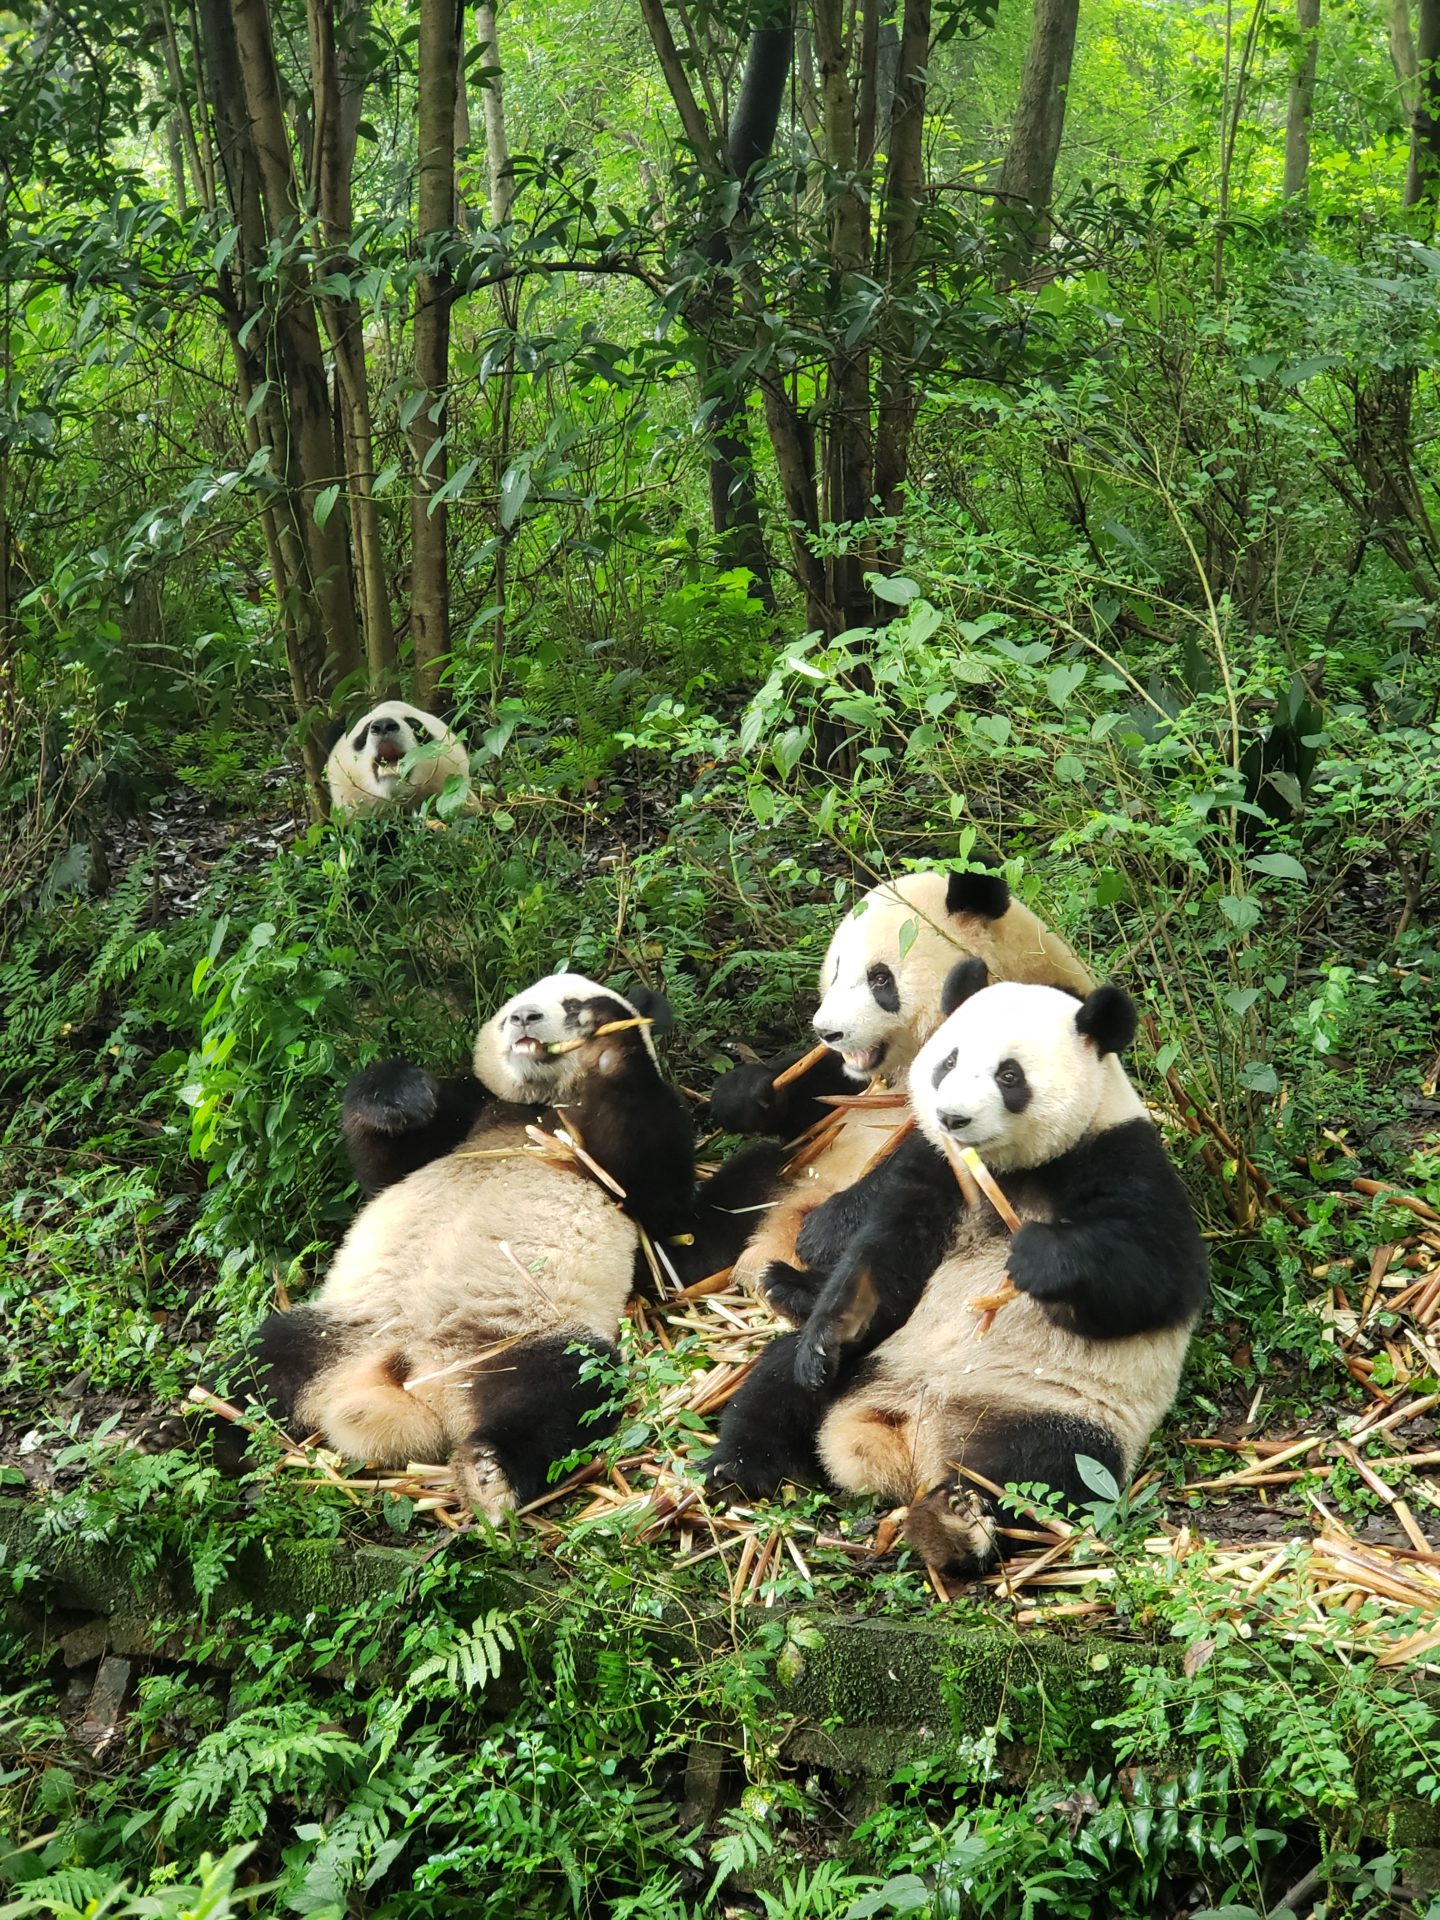 a group of pandas eating bamboo